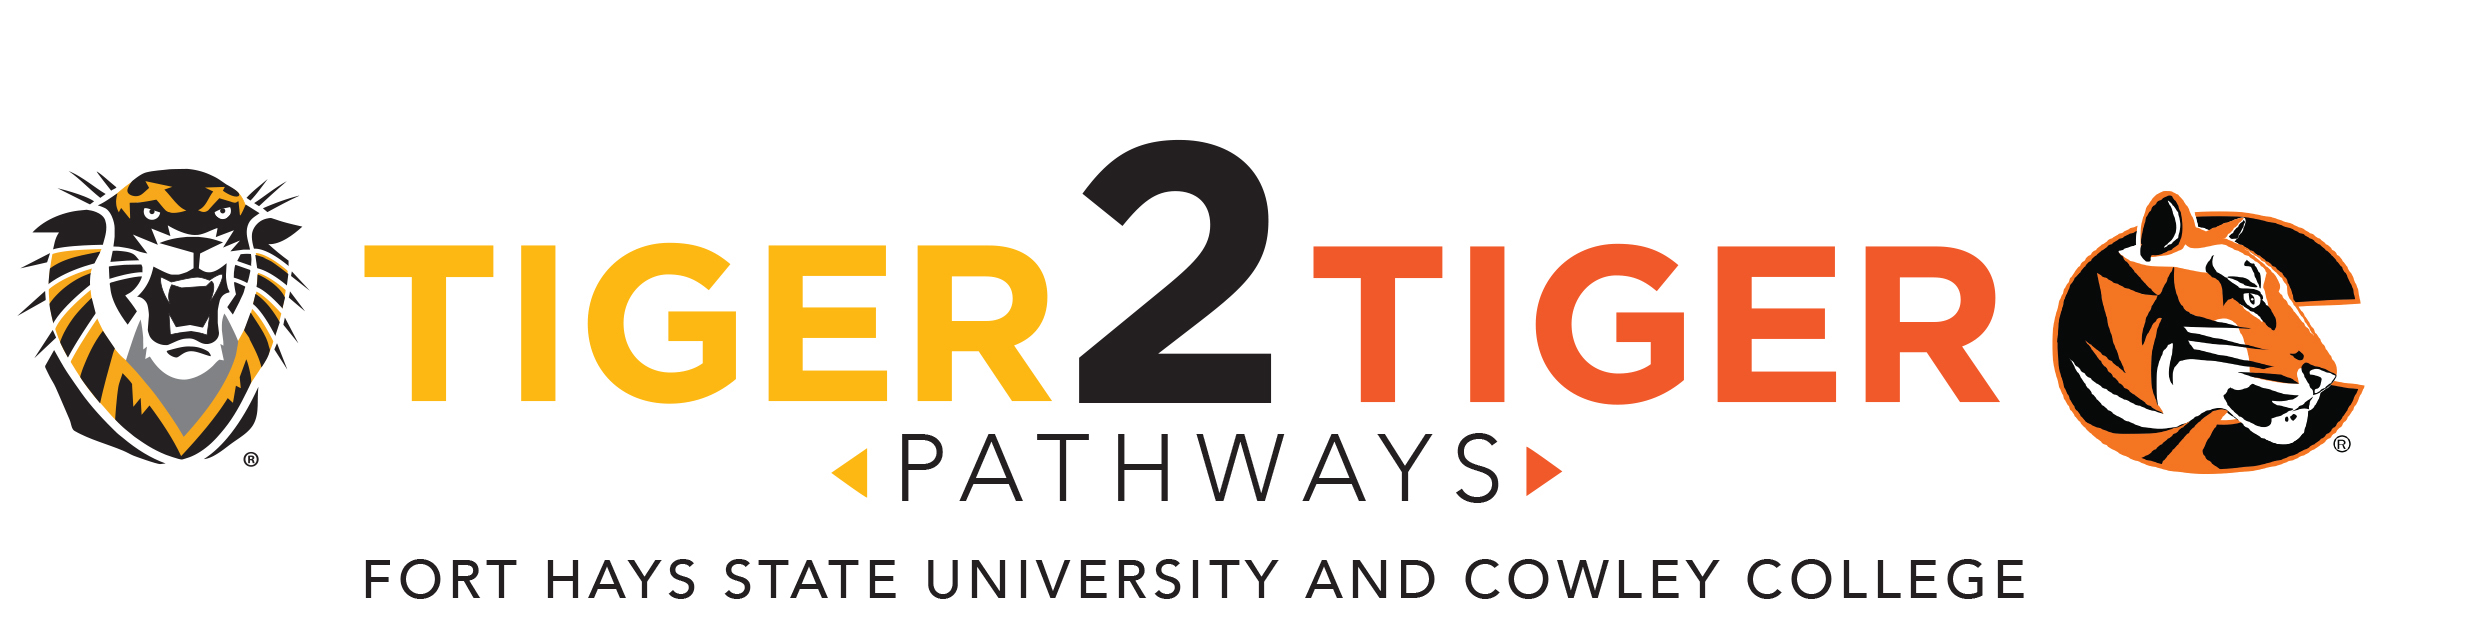 Tiger 2 tiger pathway